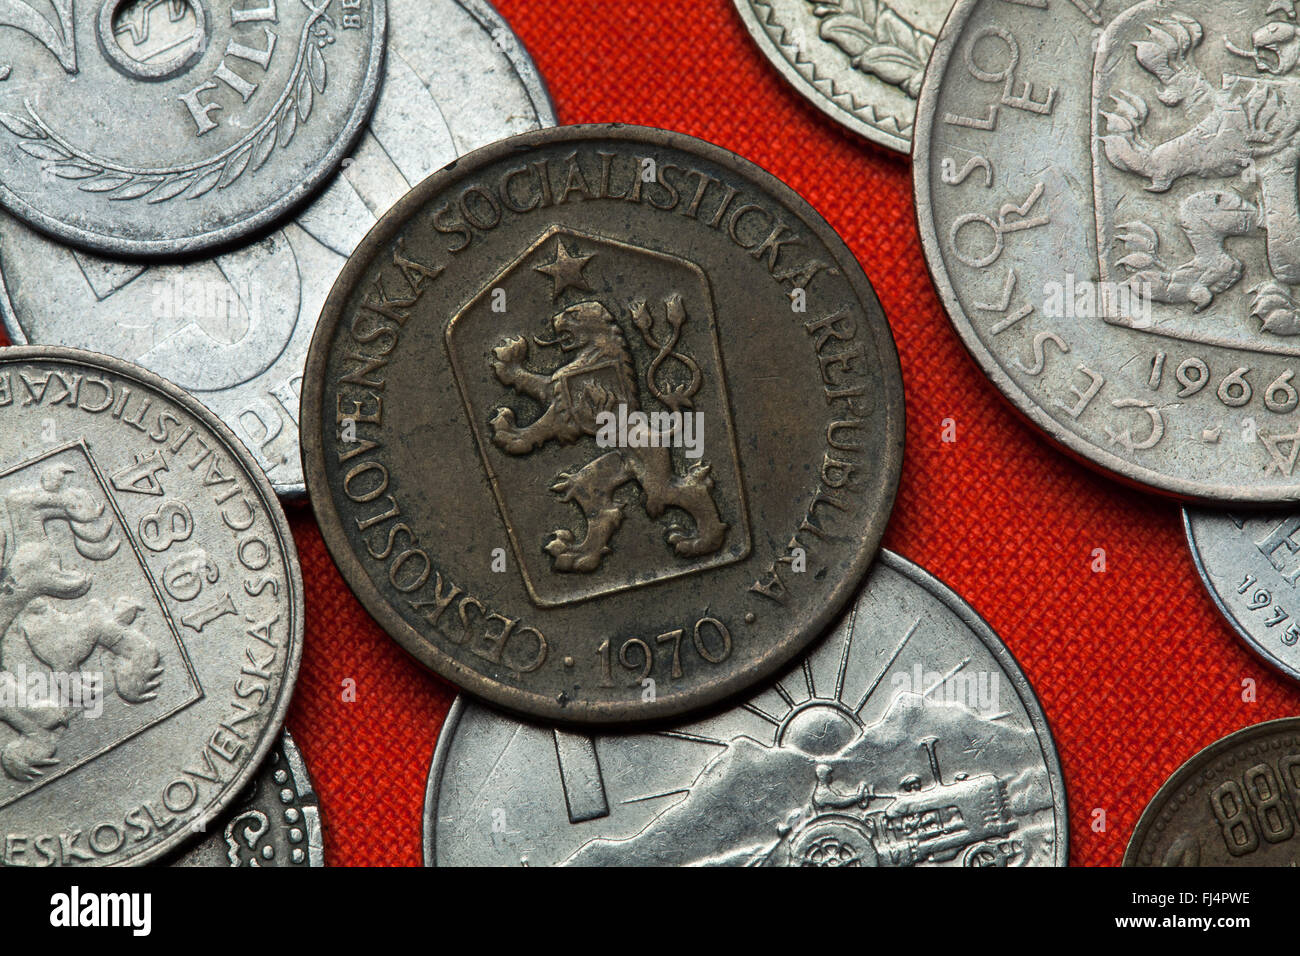 Coins of Czechoslovakia. Coat of arms of the Czechoslovak Socialist Republic depicted in the Czechoslovak one koruna coin (1970) Stock Photo